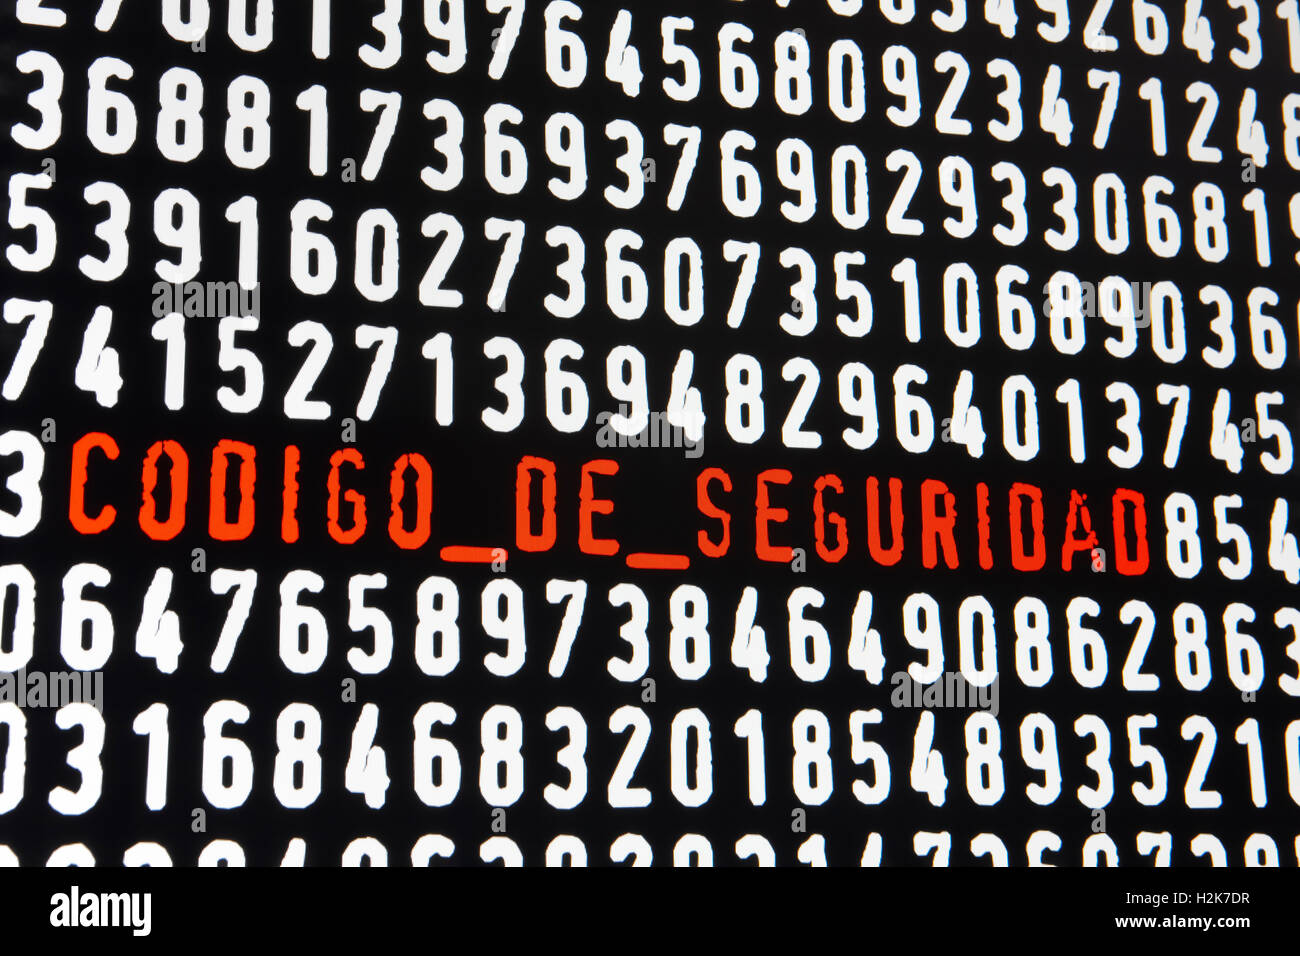 Computer screen with codigo de seguridad text on black background. Horizontal Stock Photo